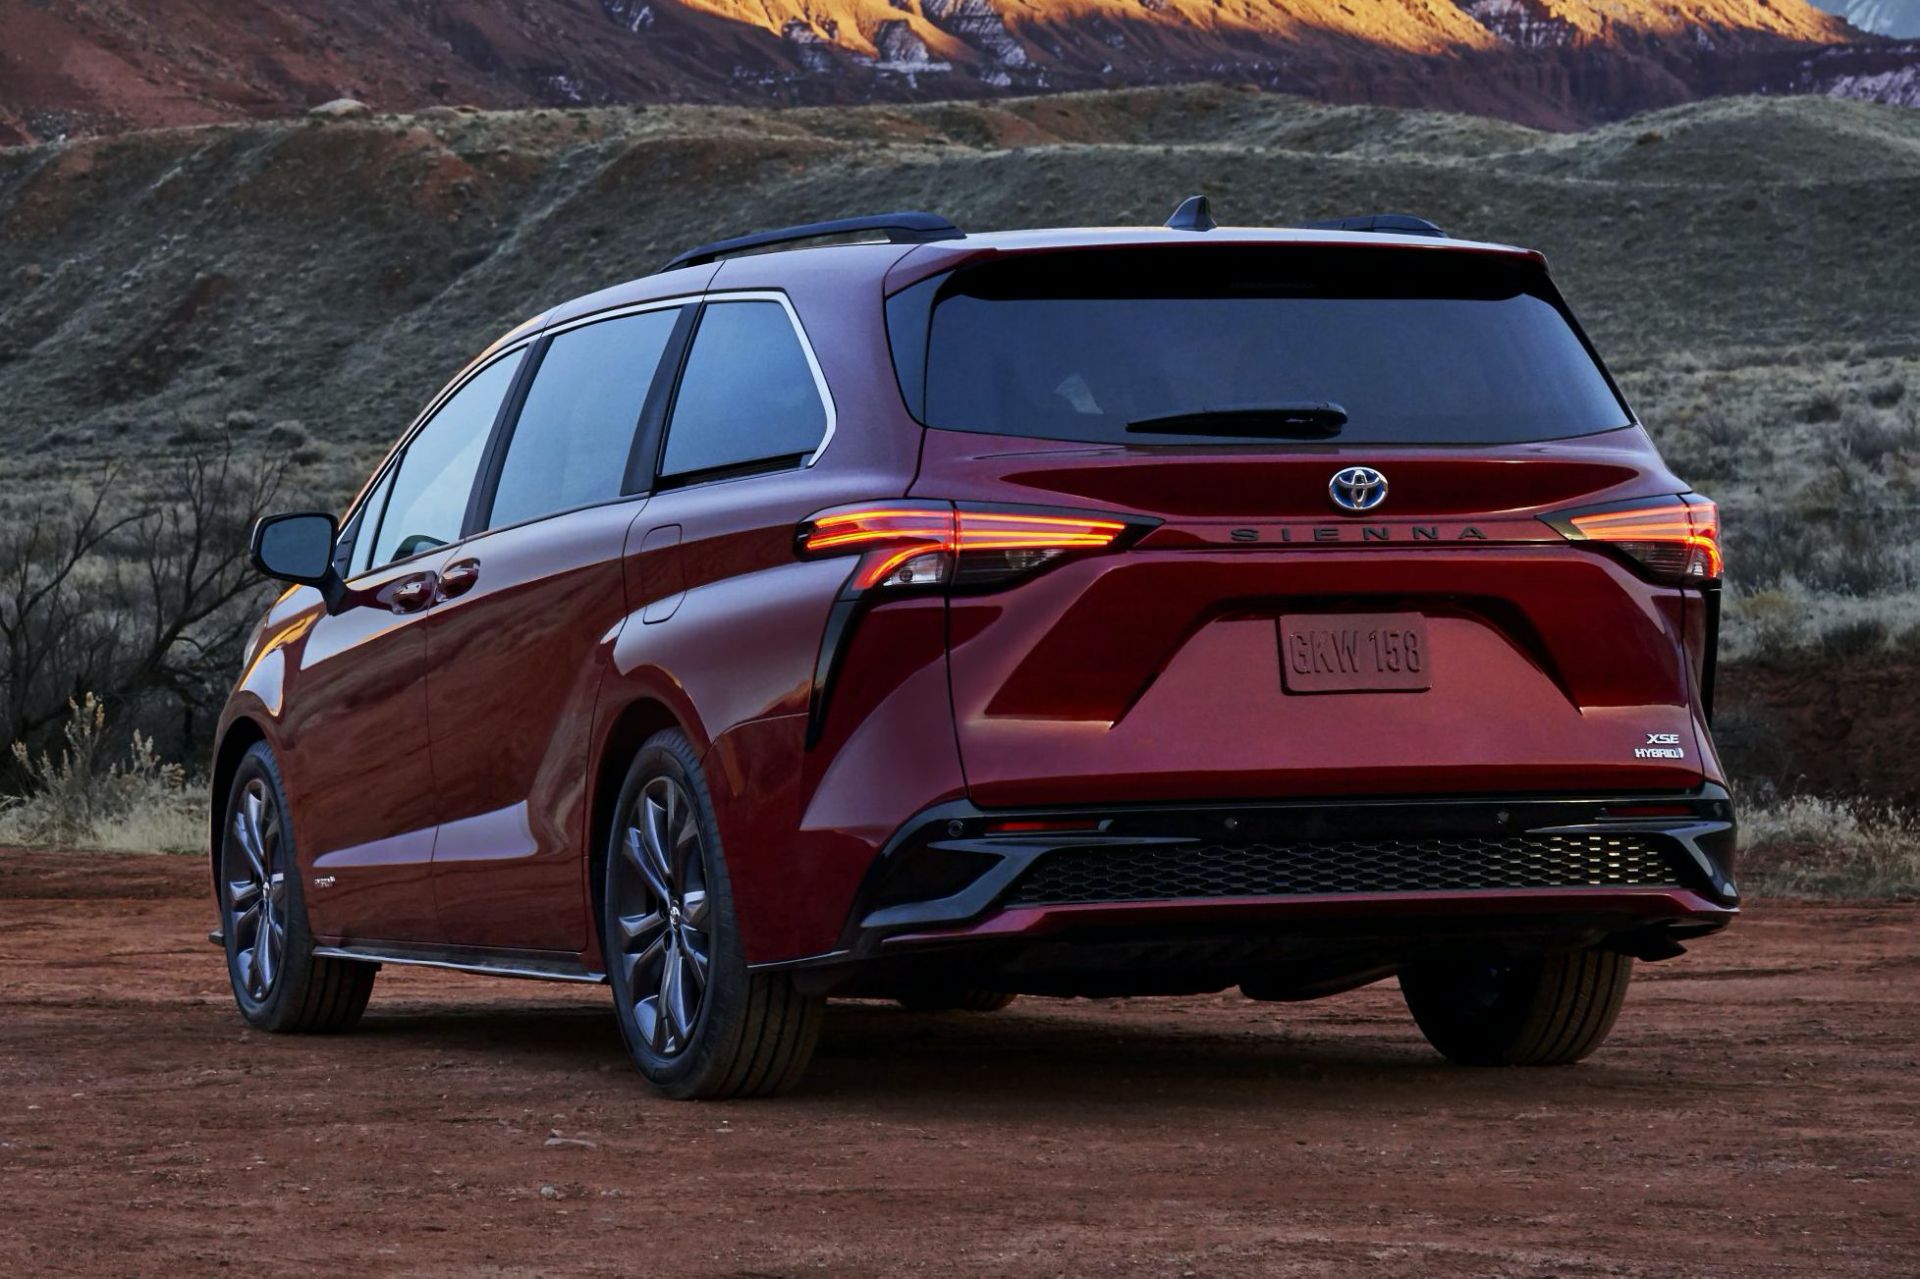 2021 toyota sienna unveiled as bold new hybrid minivan